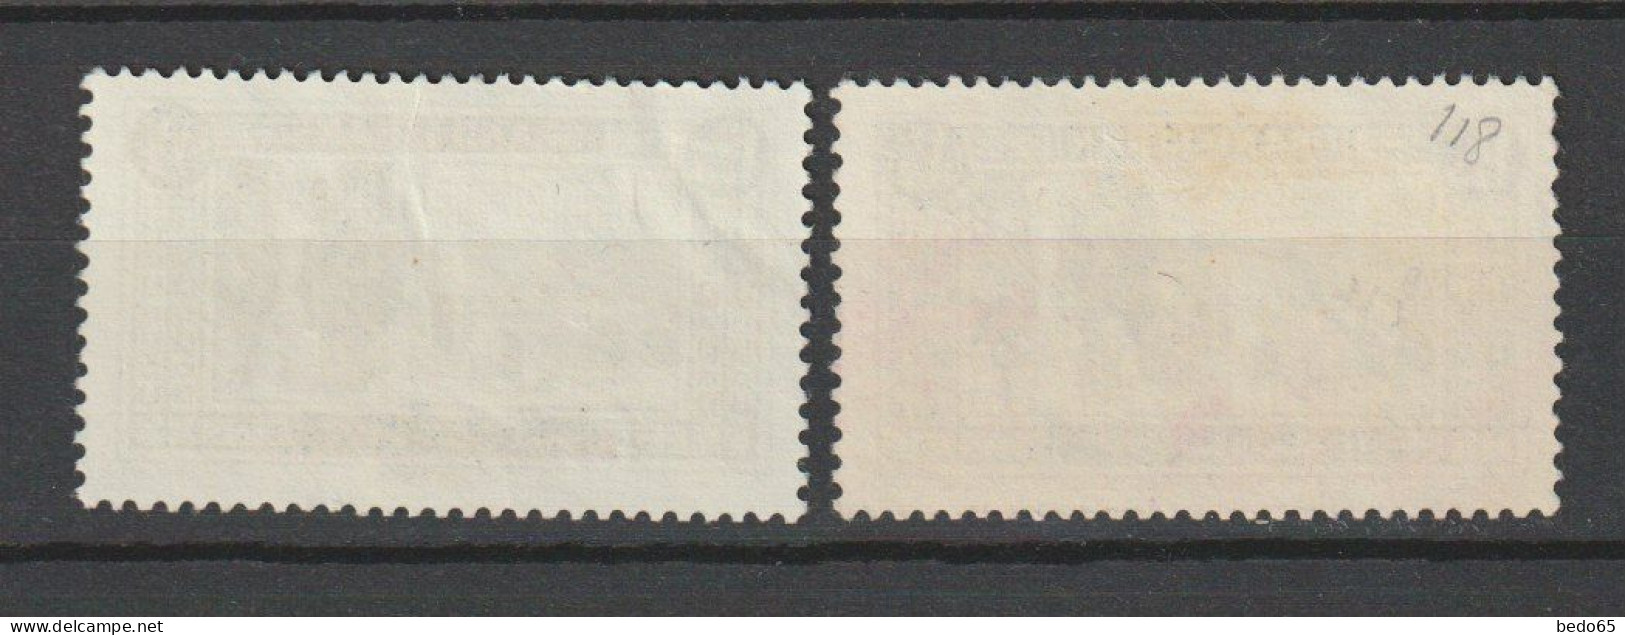 GRAND LIBAN   N ° 118 VARIETEE SANS U A REPUBLIQUE OBL TTB - Used Stamps